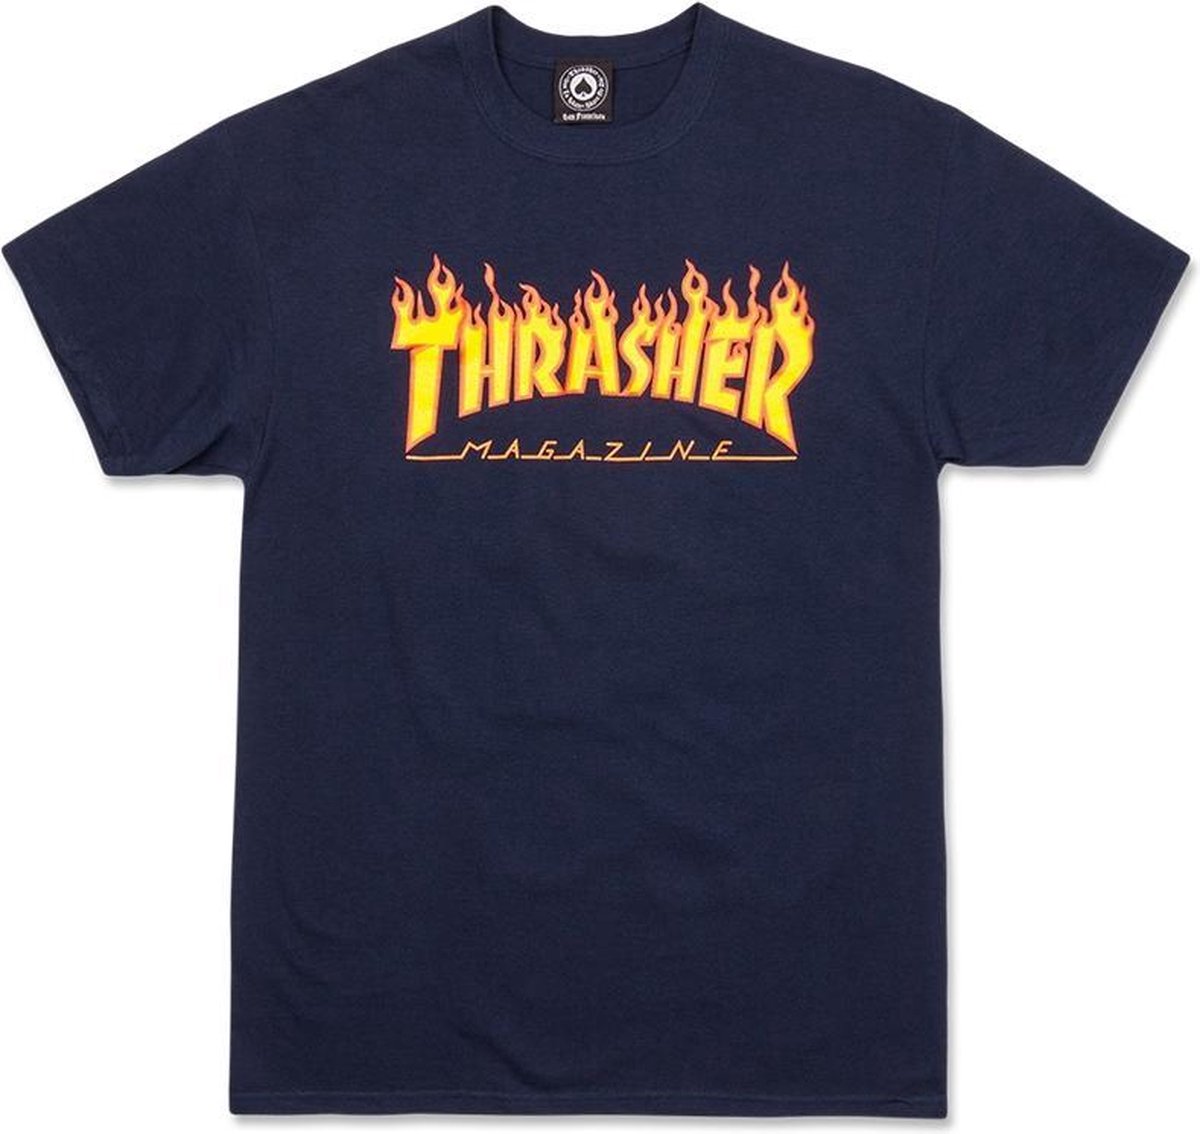 THRASHER - FLAME T-SHIRT - NAVY BLUE